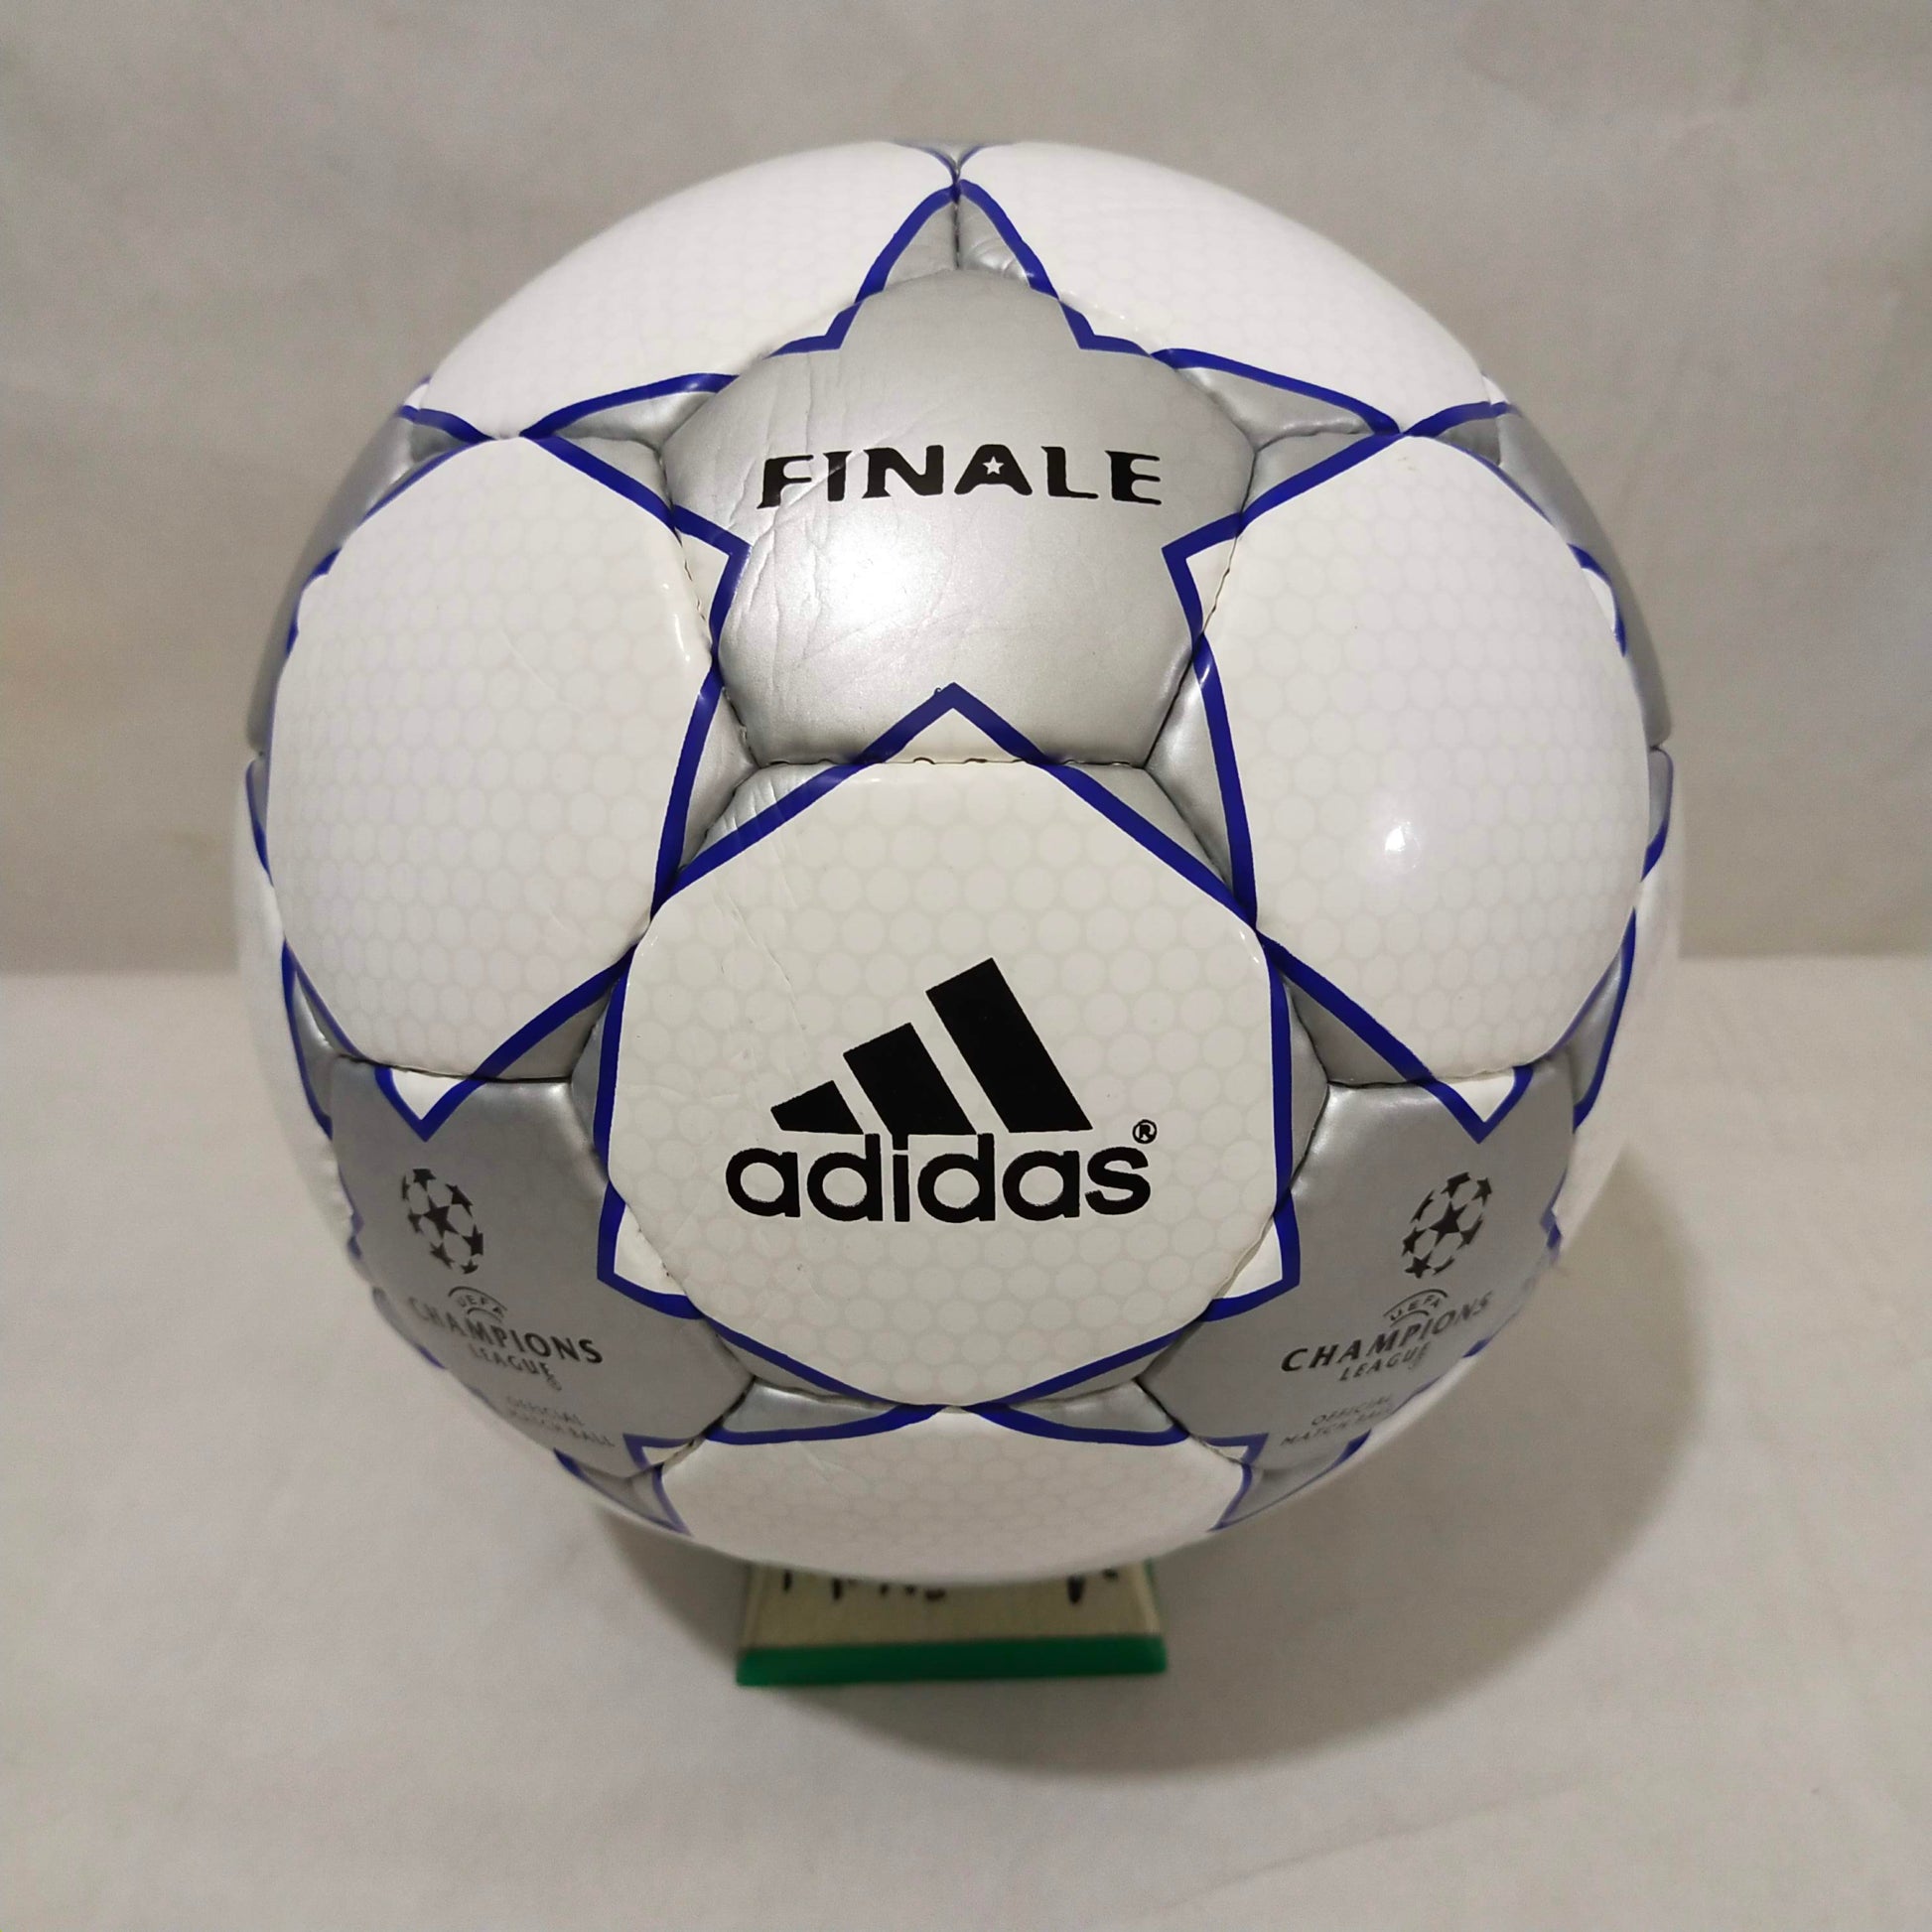 Adidas Finale 1 | 2001-2002 | UEFA Champions League Ball | Size 5 01